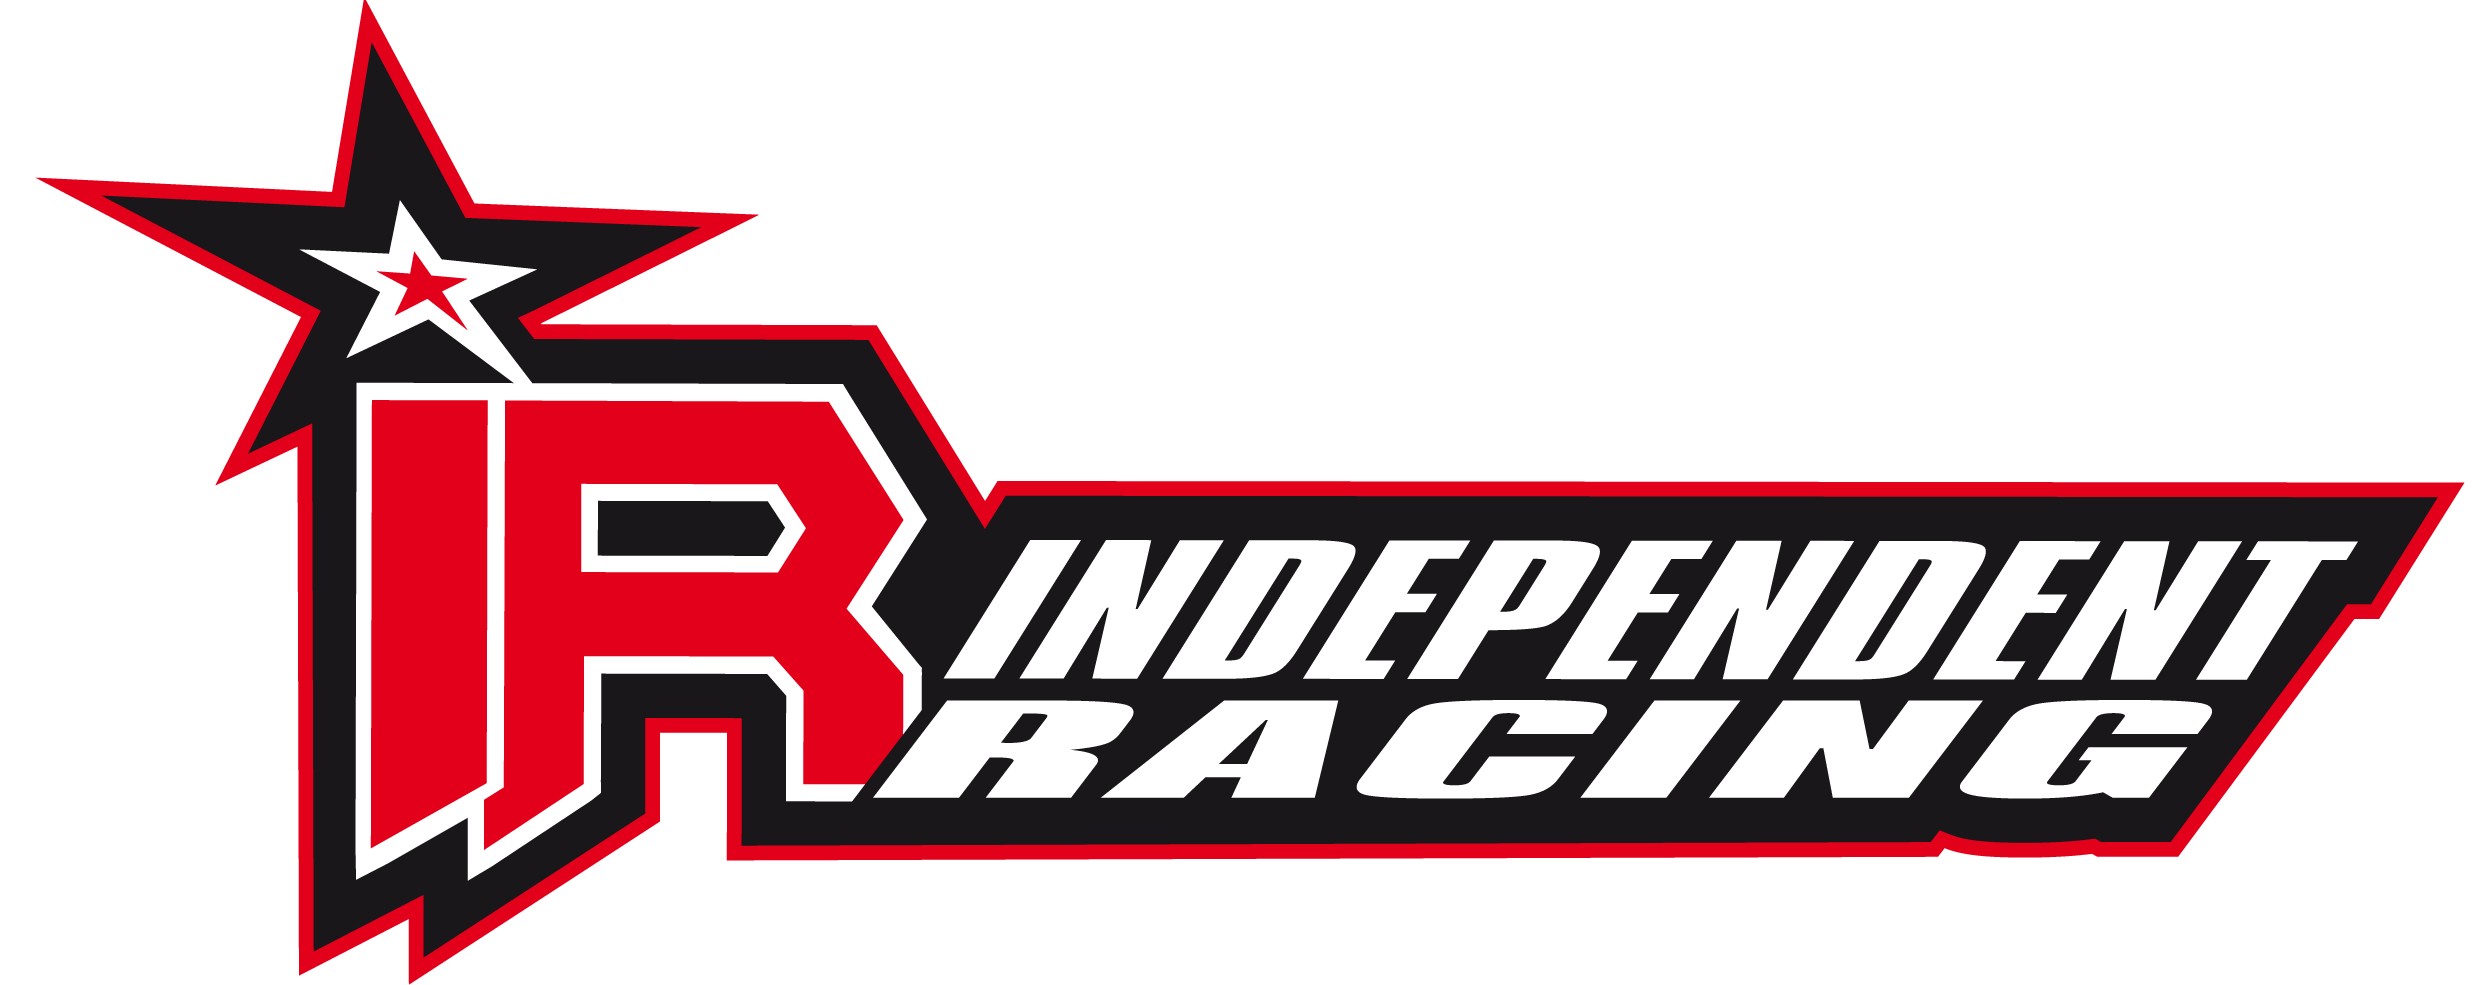 racing, Logo, Race, Js Wallpaper